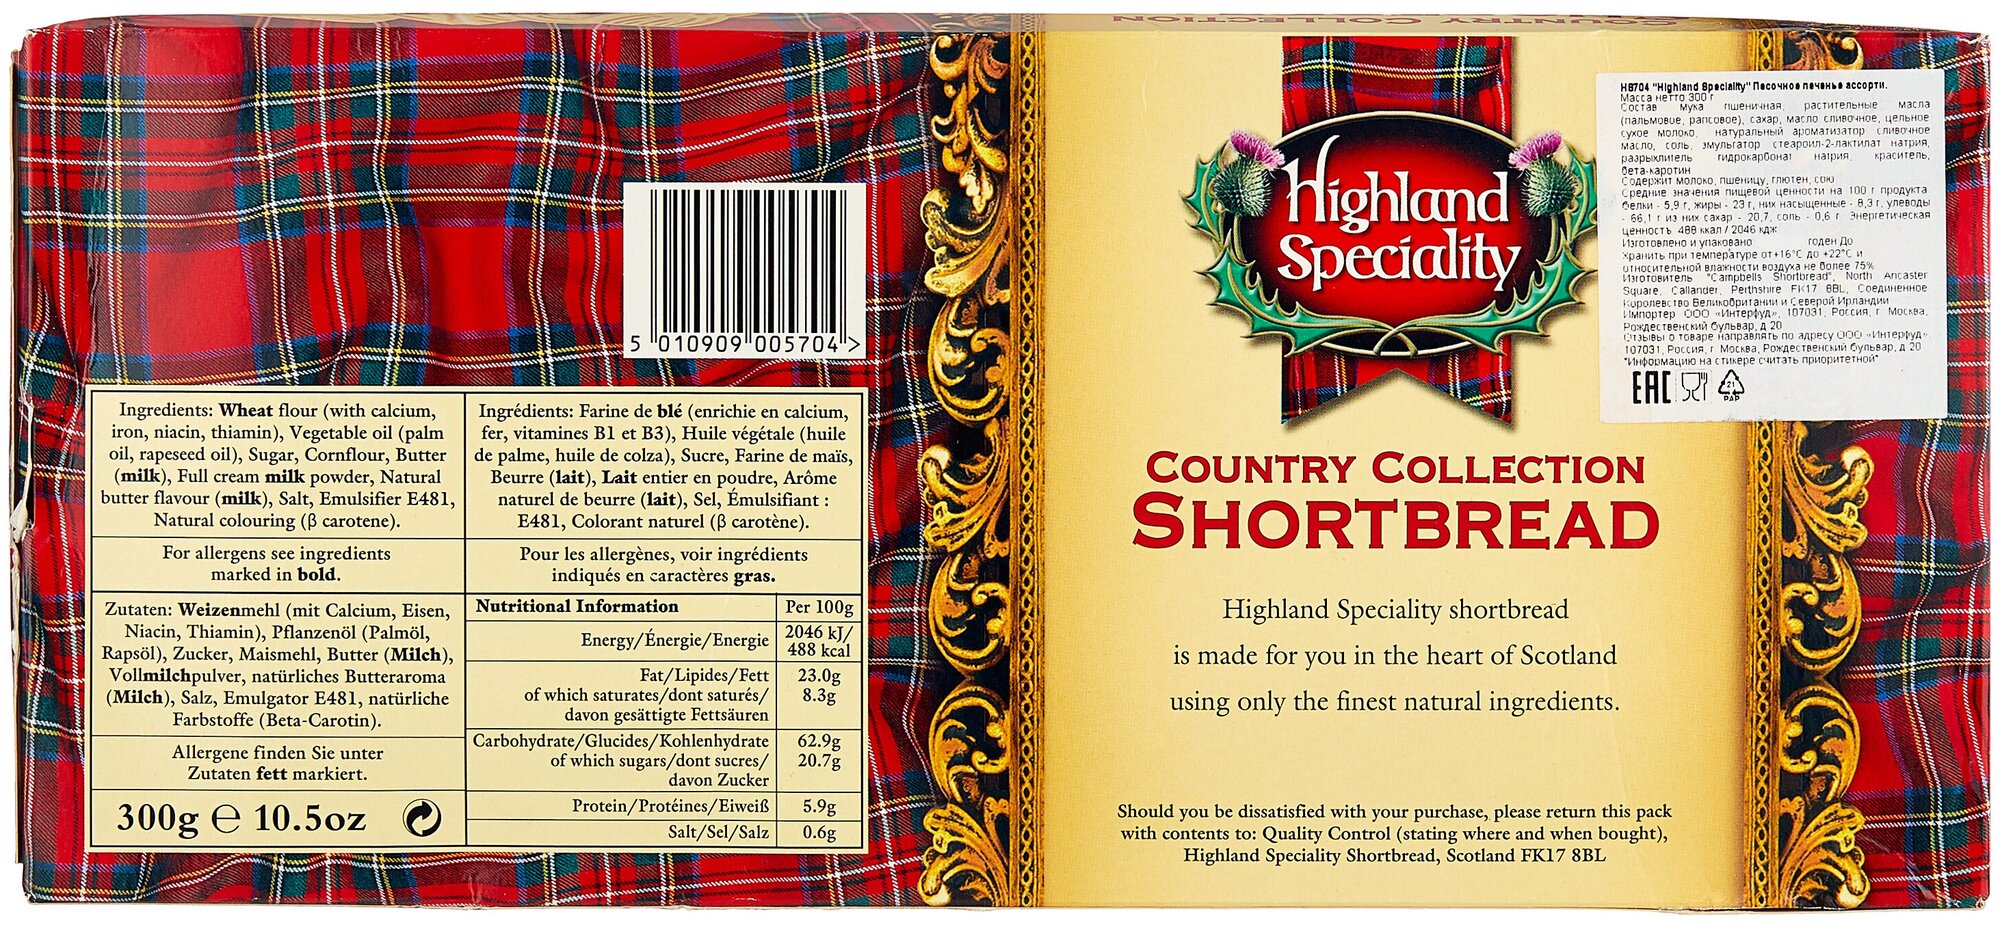 HS704 "Highland Speciality" Country Collection Shortbread Песочное печенье ассорти, 300г - фотография № 2